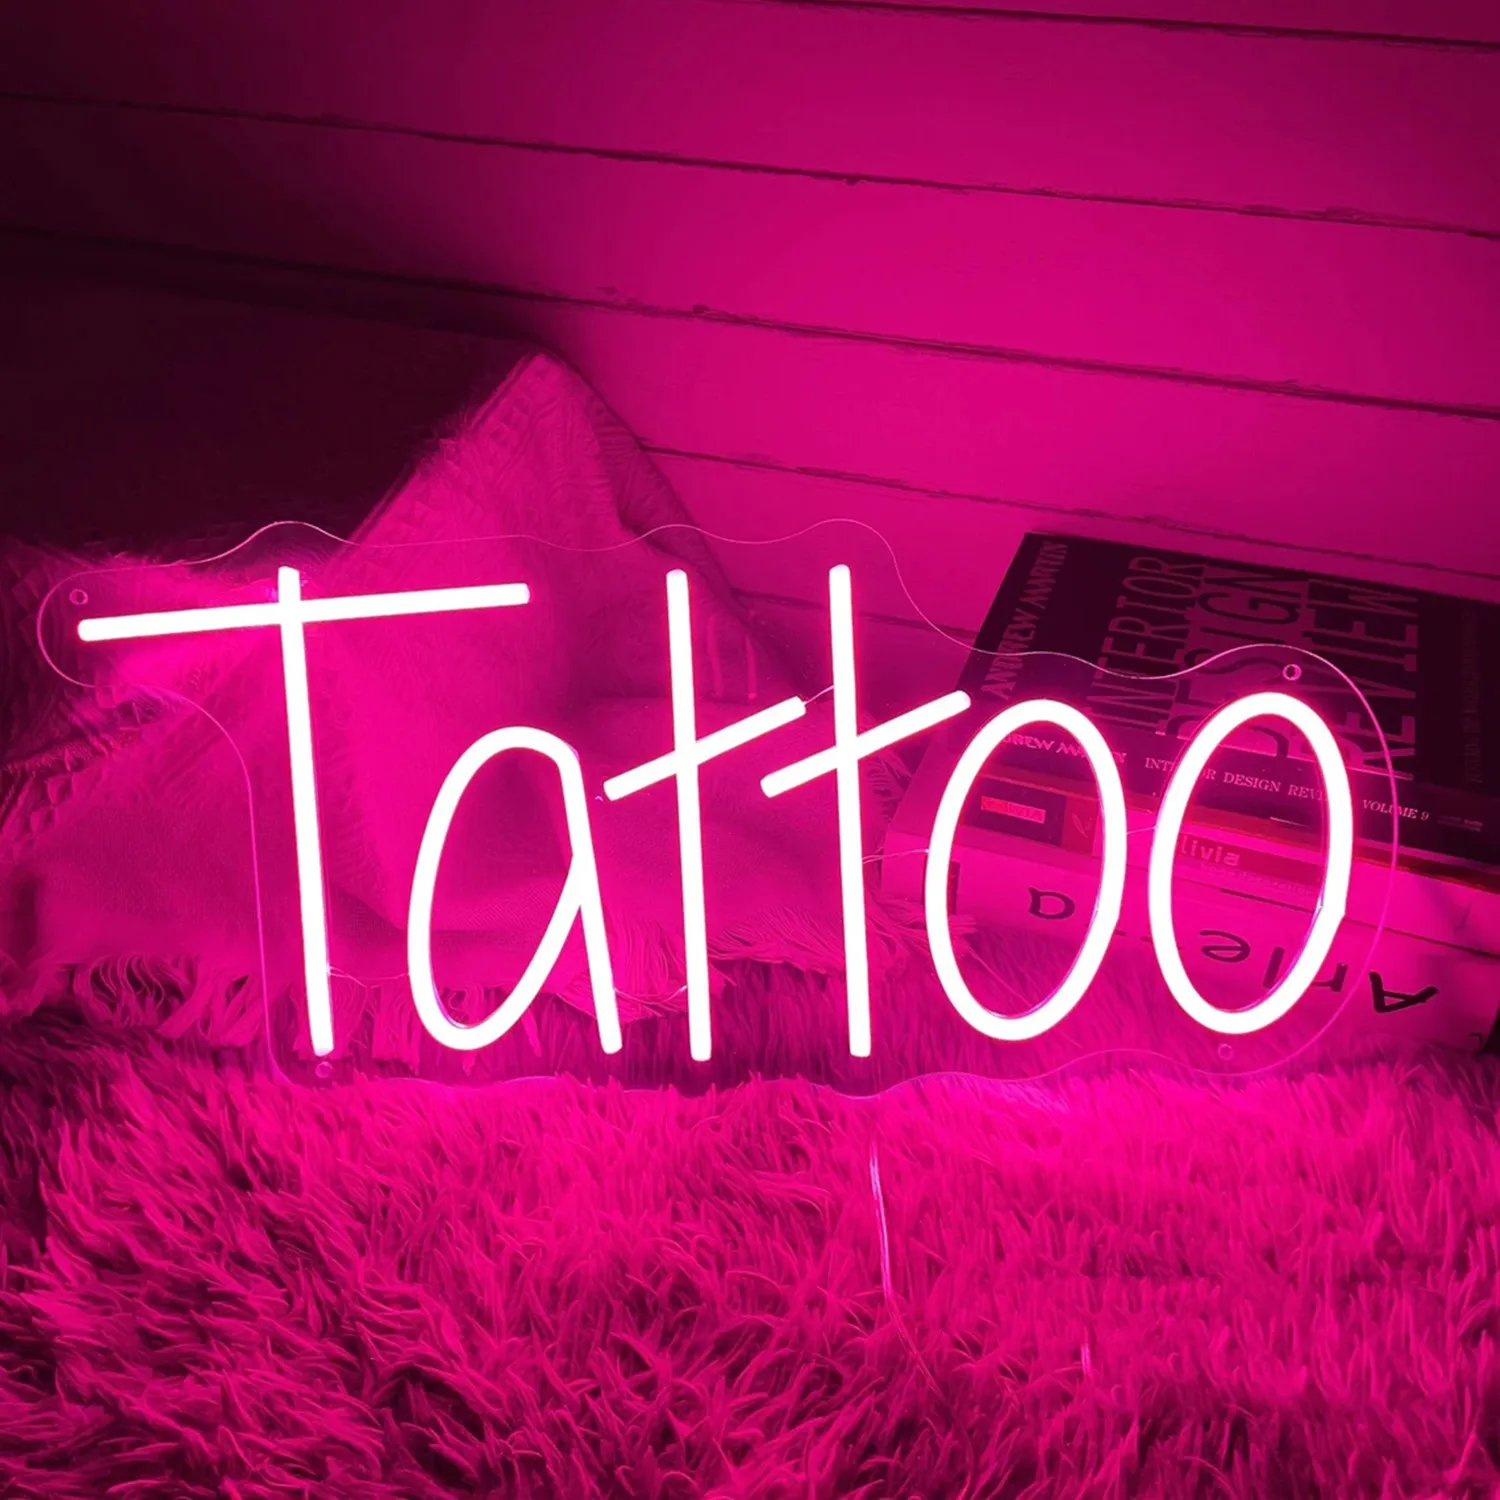 

Tattoo Neon Light Wall Sign for Tattoo Salon Studio Shop LED Fun Wall Art Decor for Business Stores Logo Window Display Man Cave